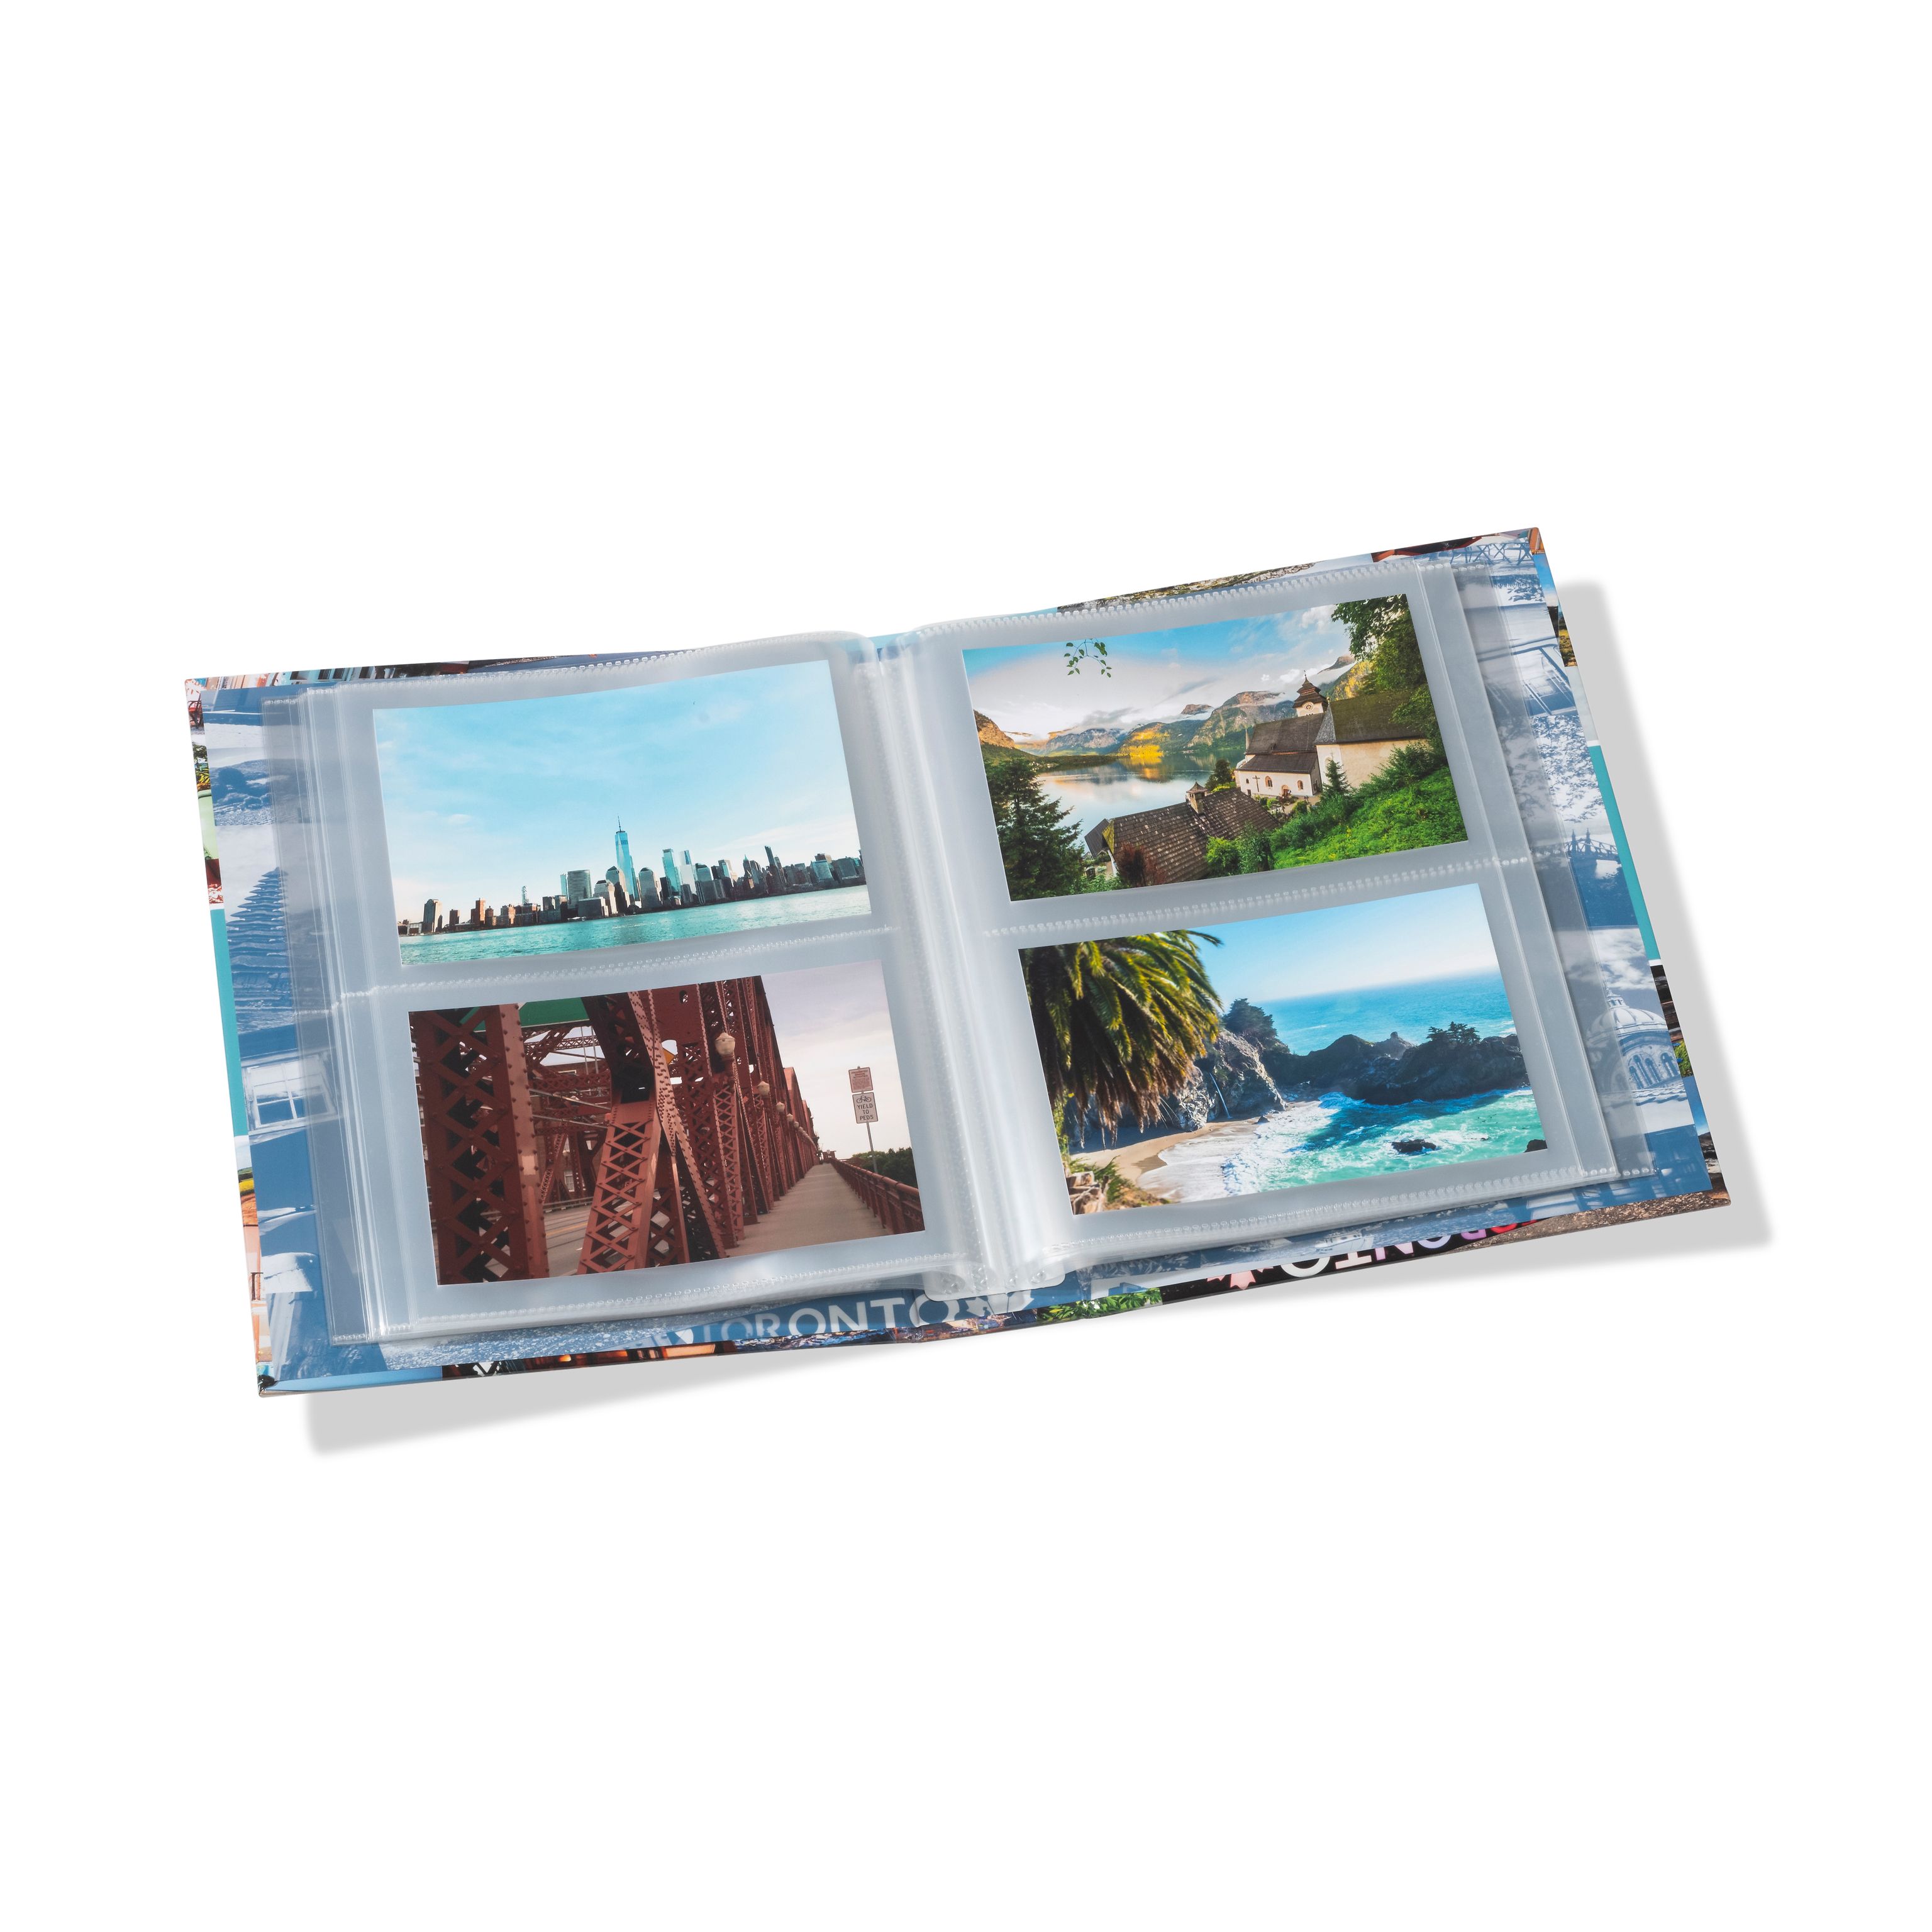 Generico 10 álbumes de fotos de 10 x 15 cm para albergar 400 fotos de 9 x 13,10 x 15,11 x 15 cm Colores surtidos 